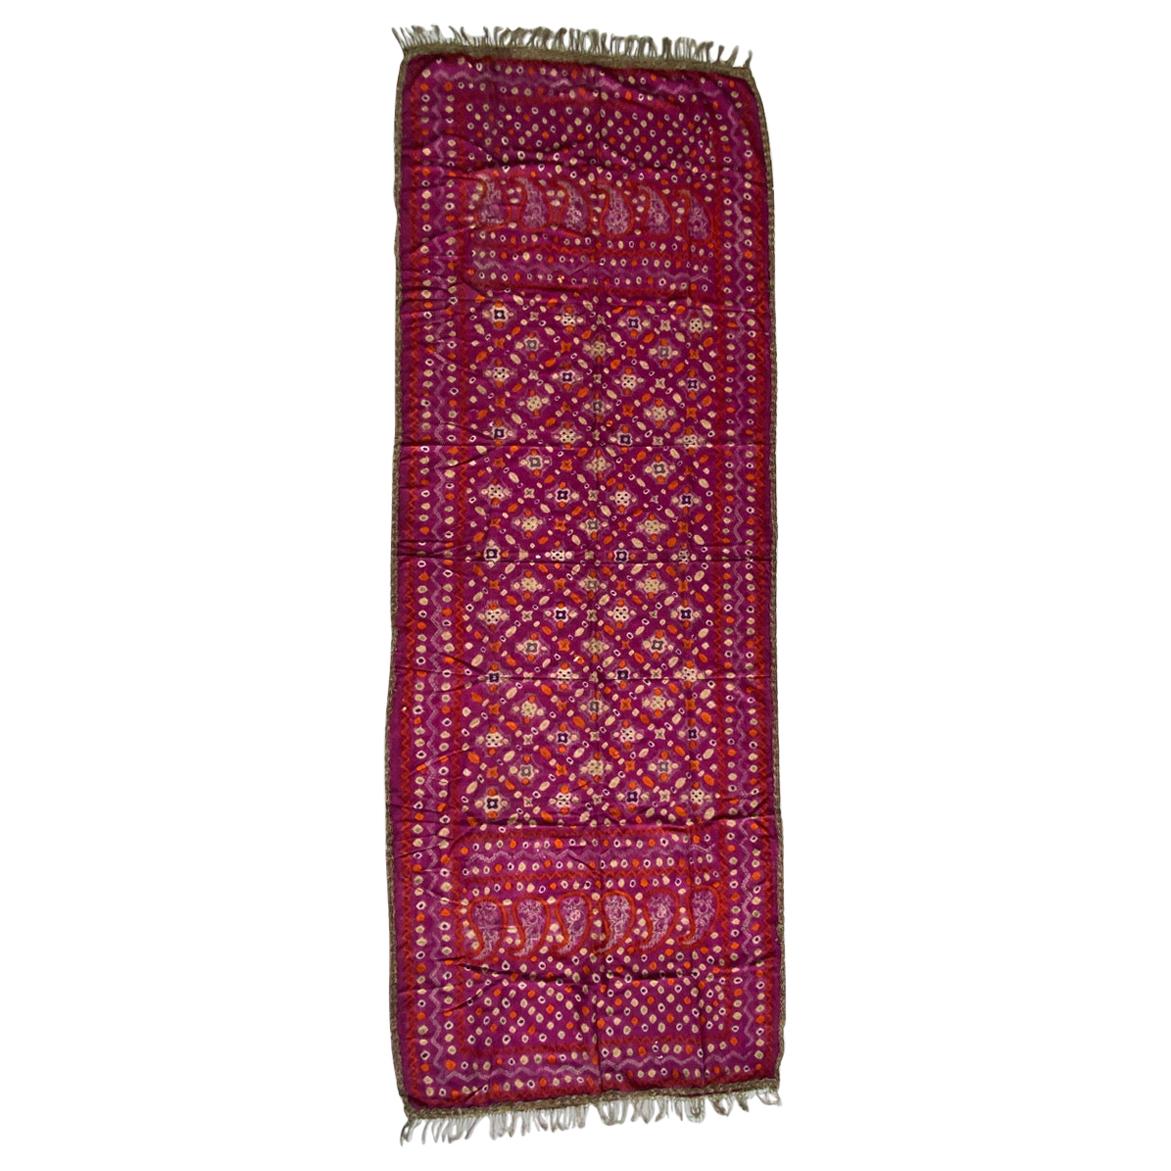 Andrianna Shamaris Antique Vibrant Fine Silk Ceremonial Shoulder Cloth